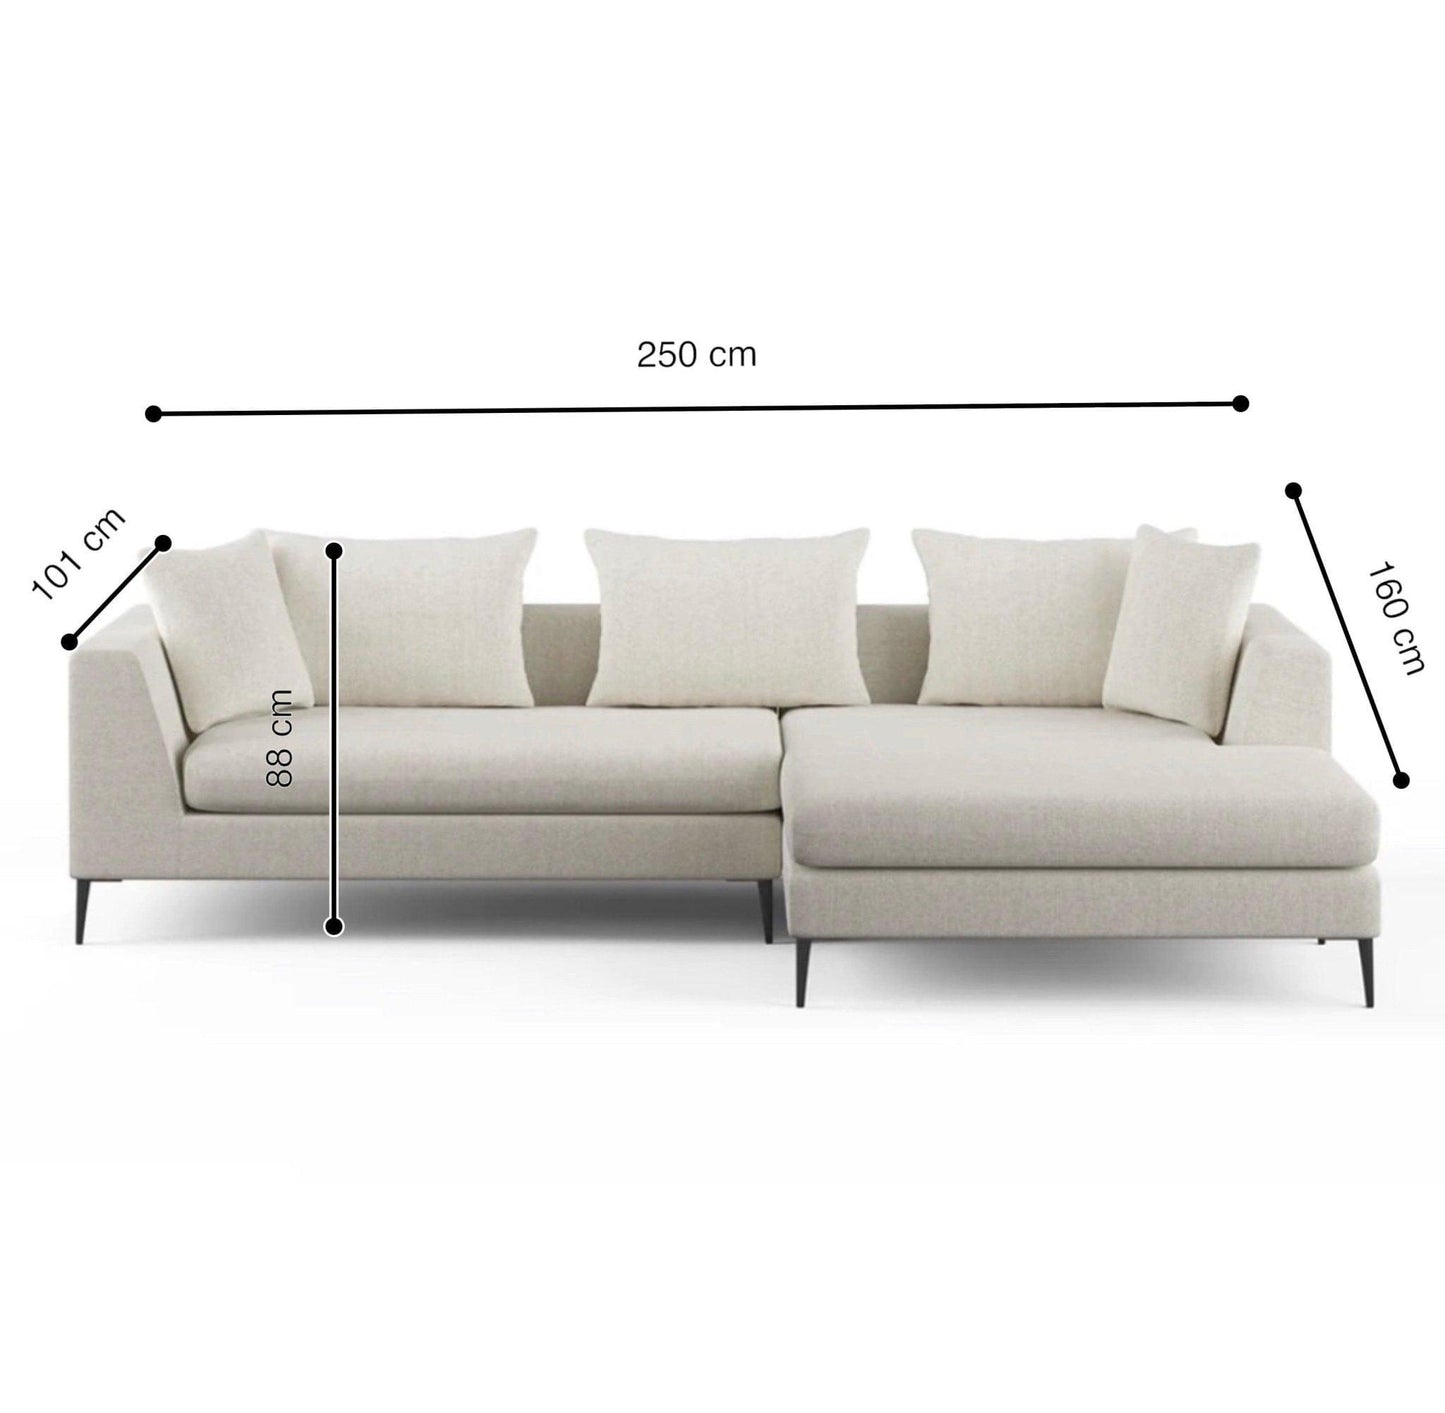 Home Atelier Cotton Linen Fabric / 3 seater L-shape/ Length 250cm / Cream Arellano Sectional Sofa